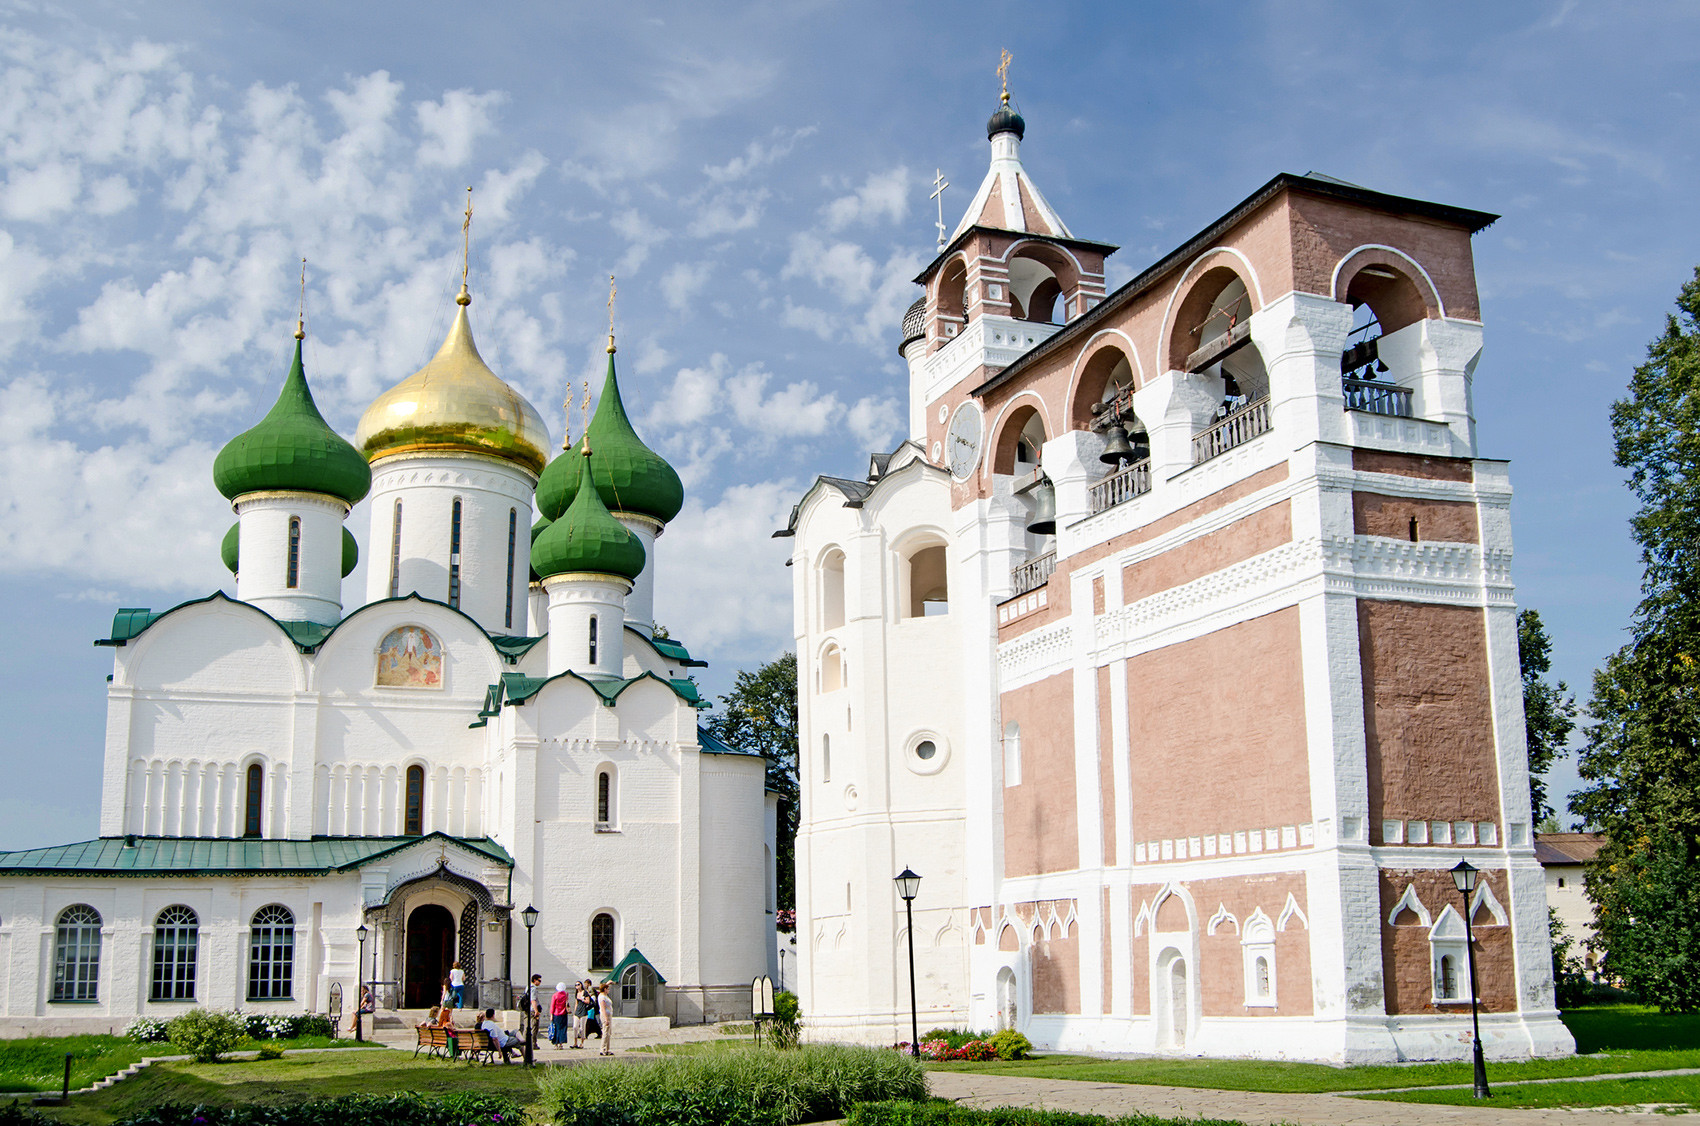 The Pokrovsky (Intercession) Convent